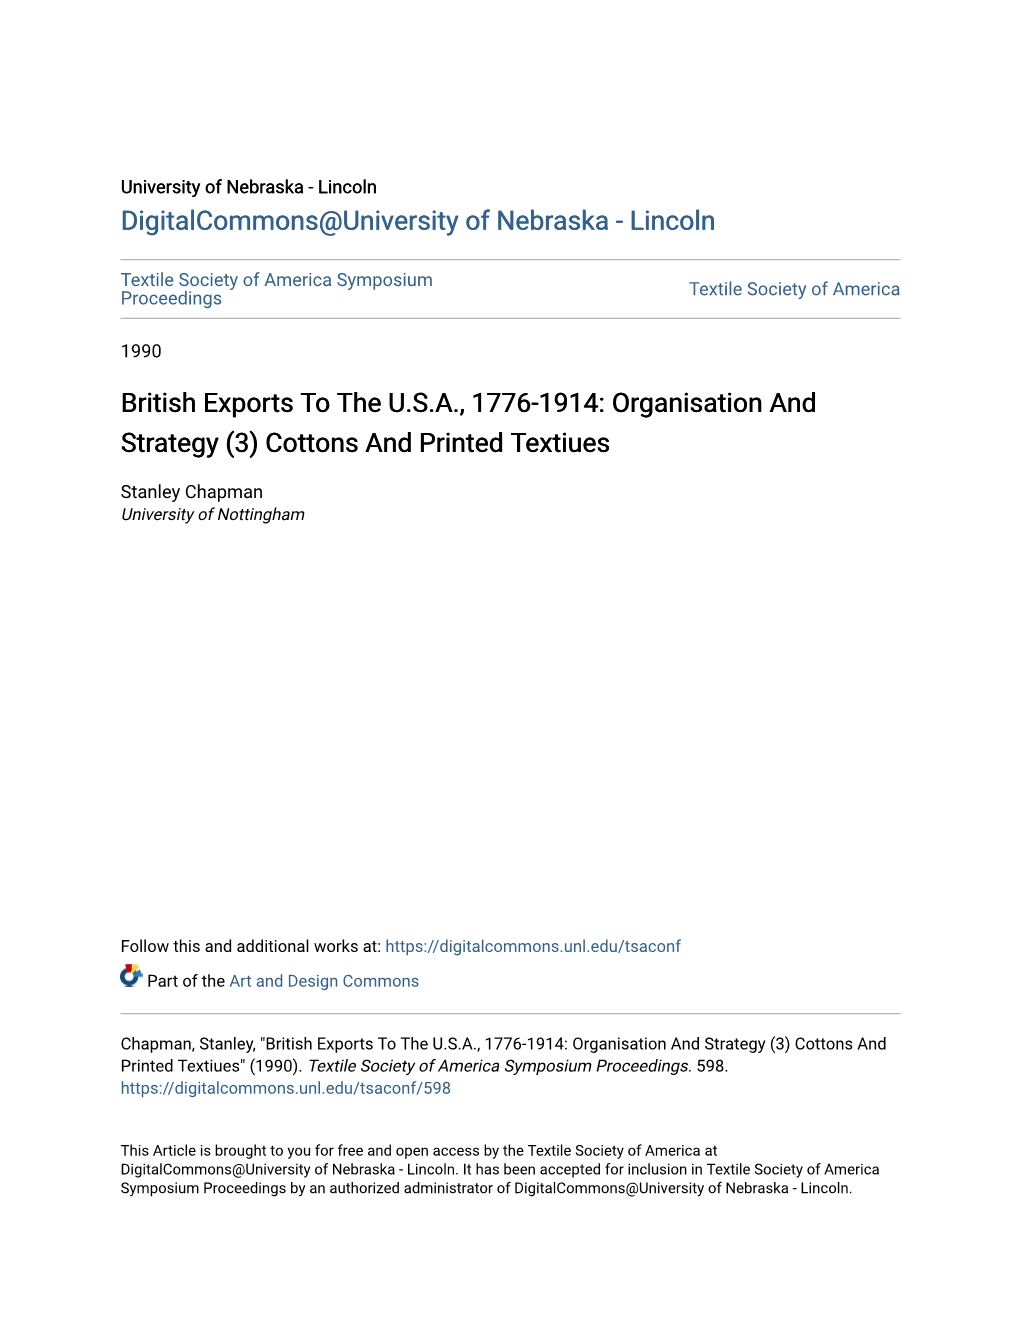 British Exports to the USA, 1776-1914